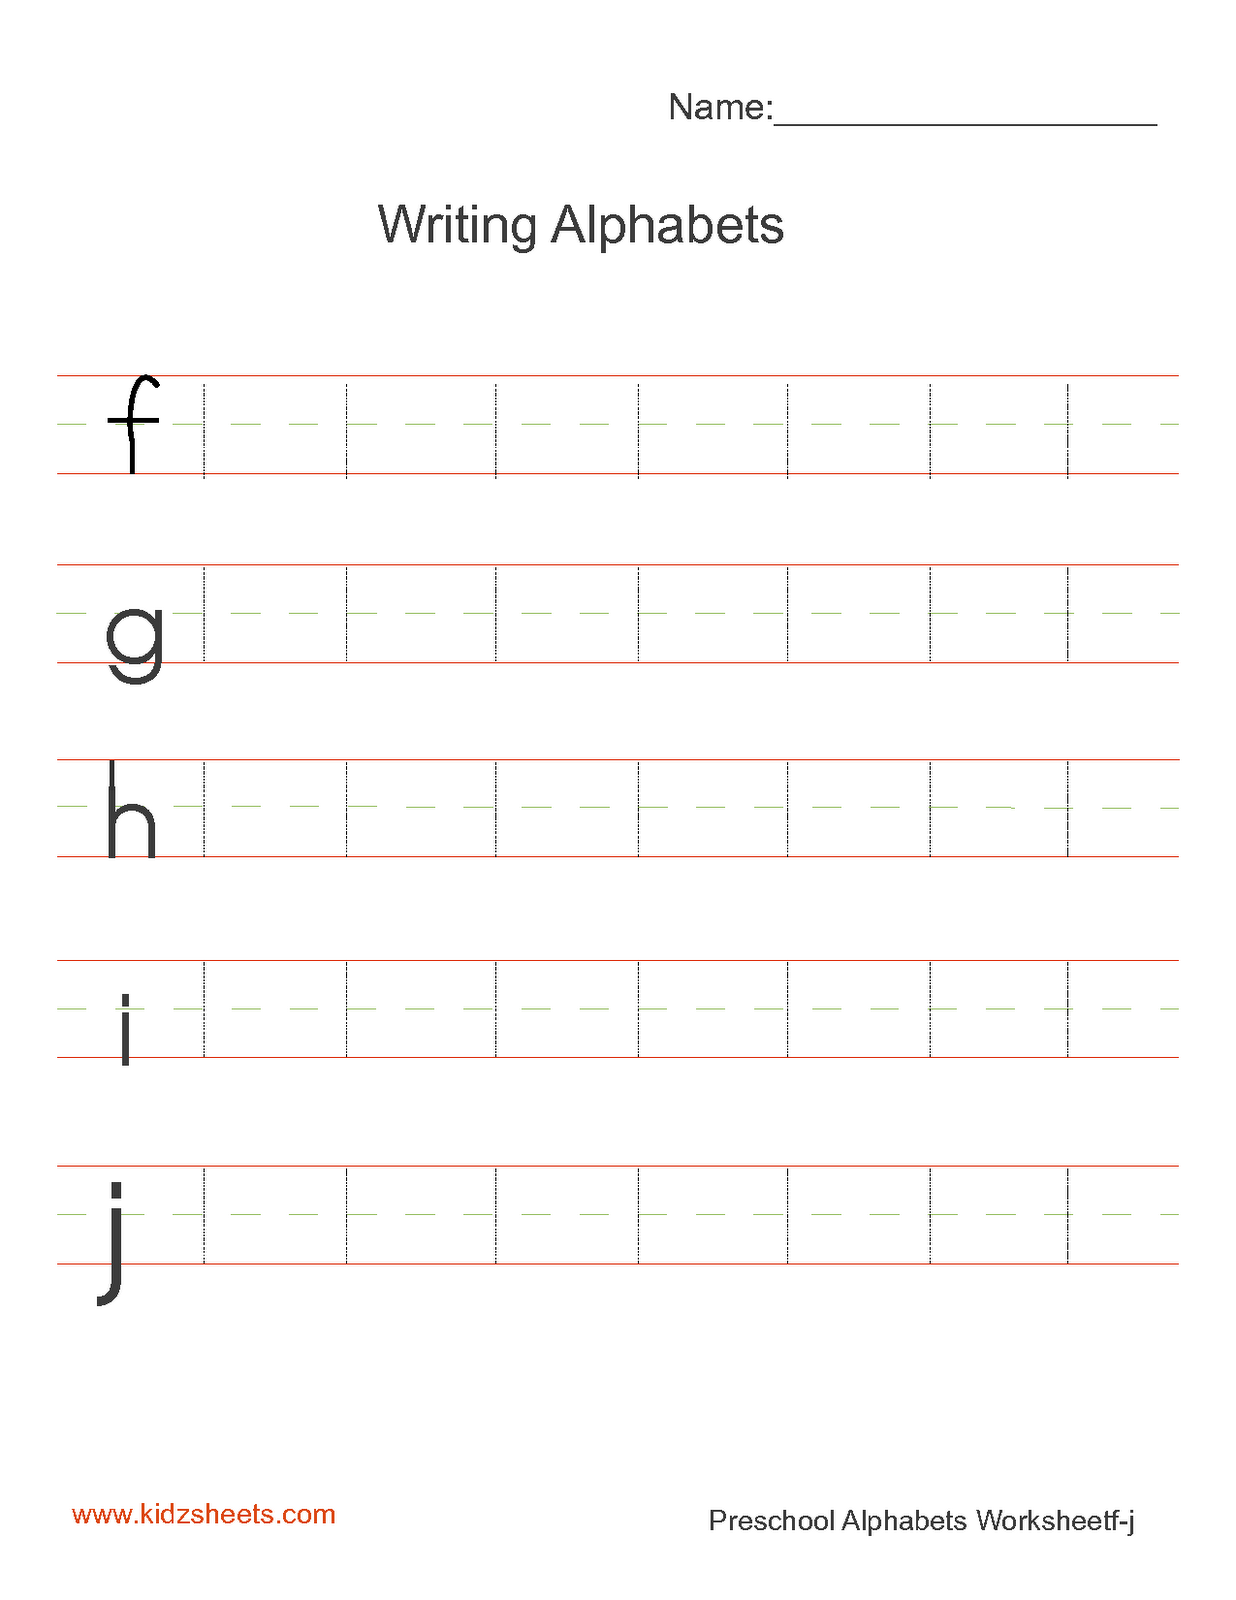 Writing Lower Case Alphabets Image